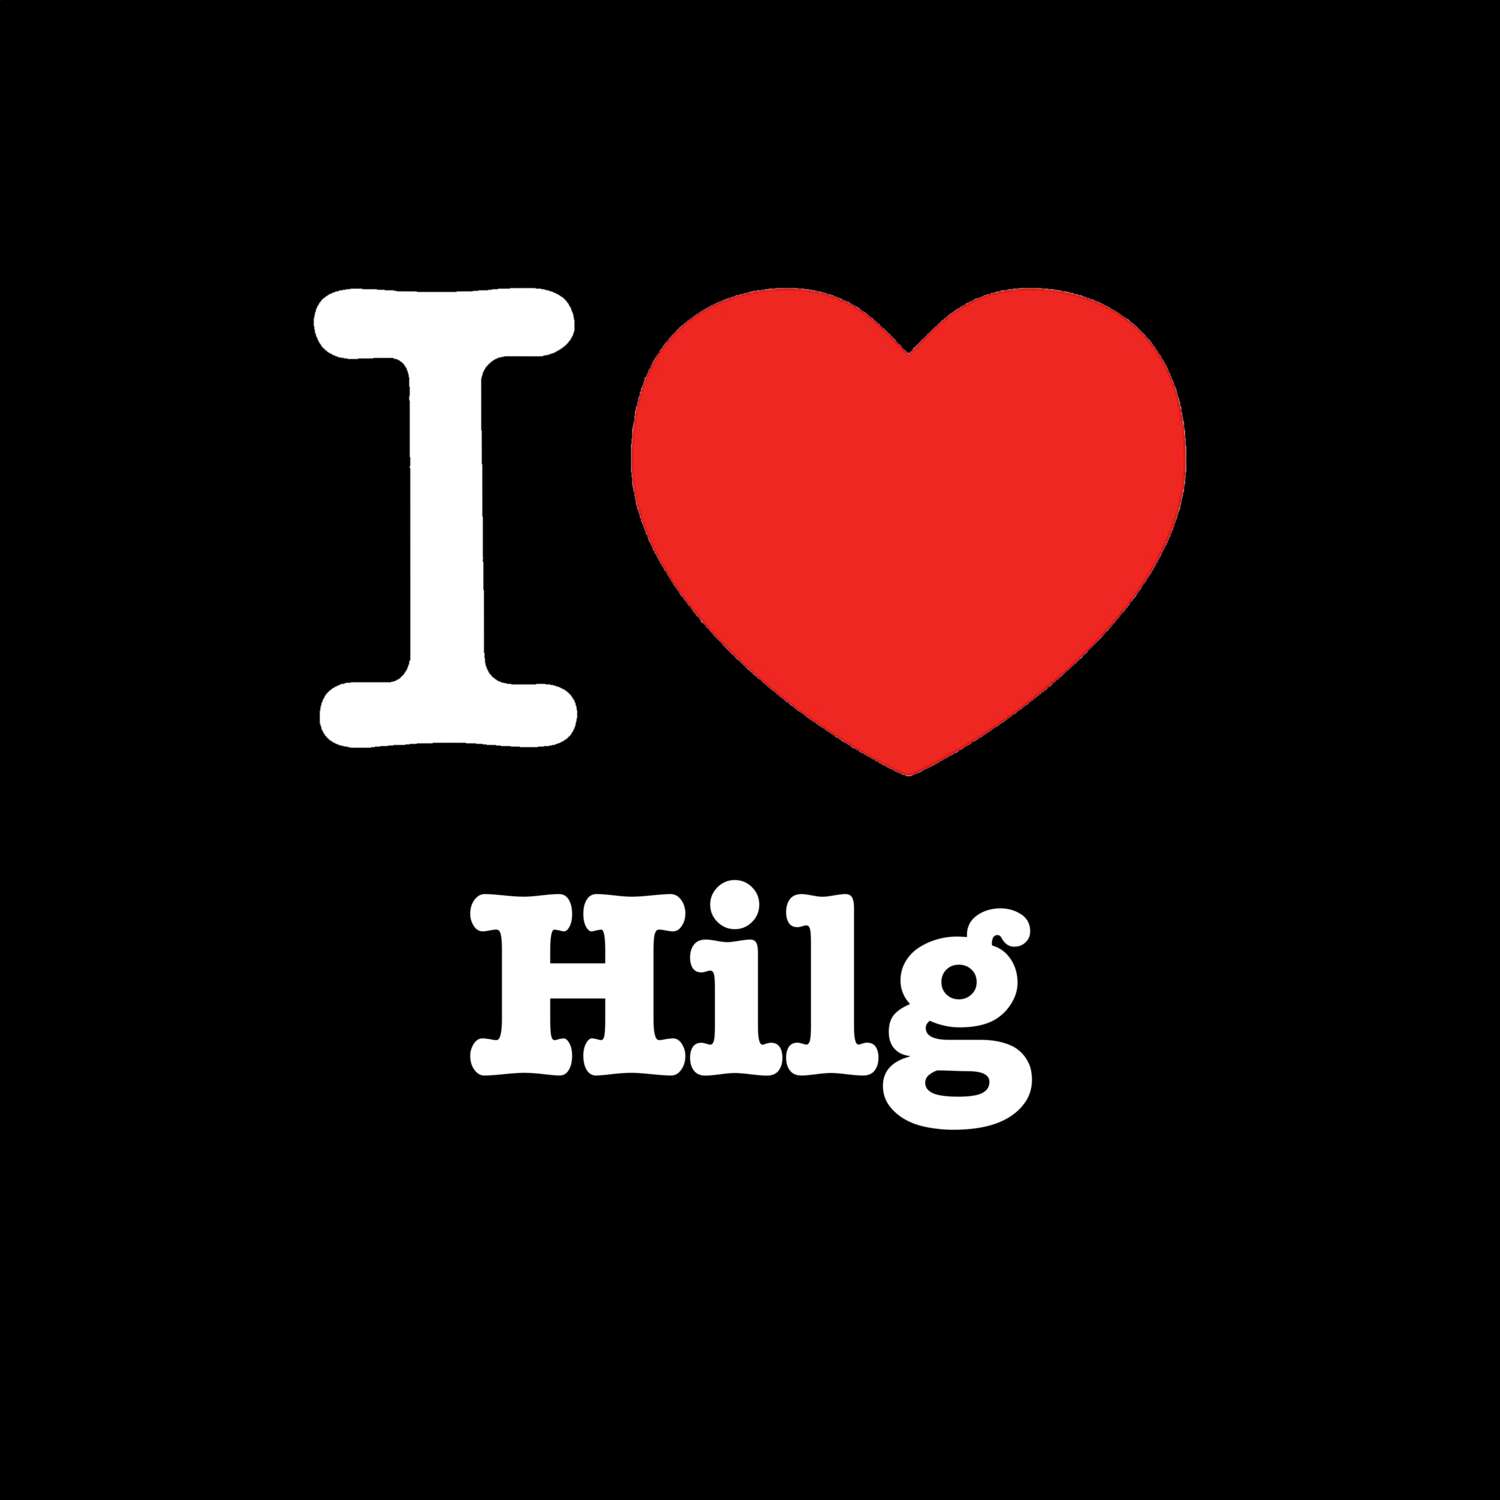 Hilg T-Shirt »I love«